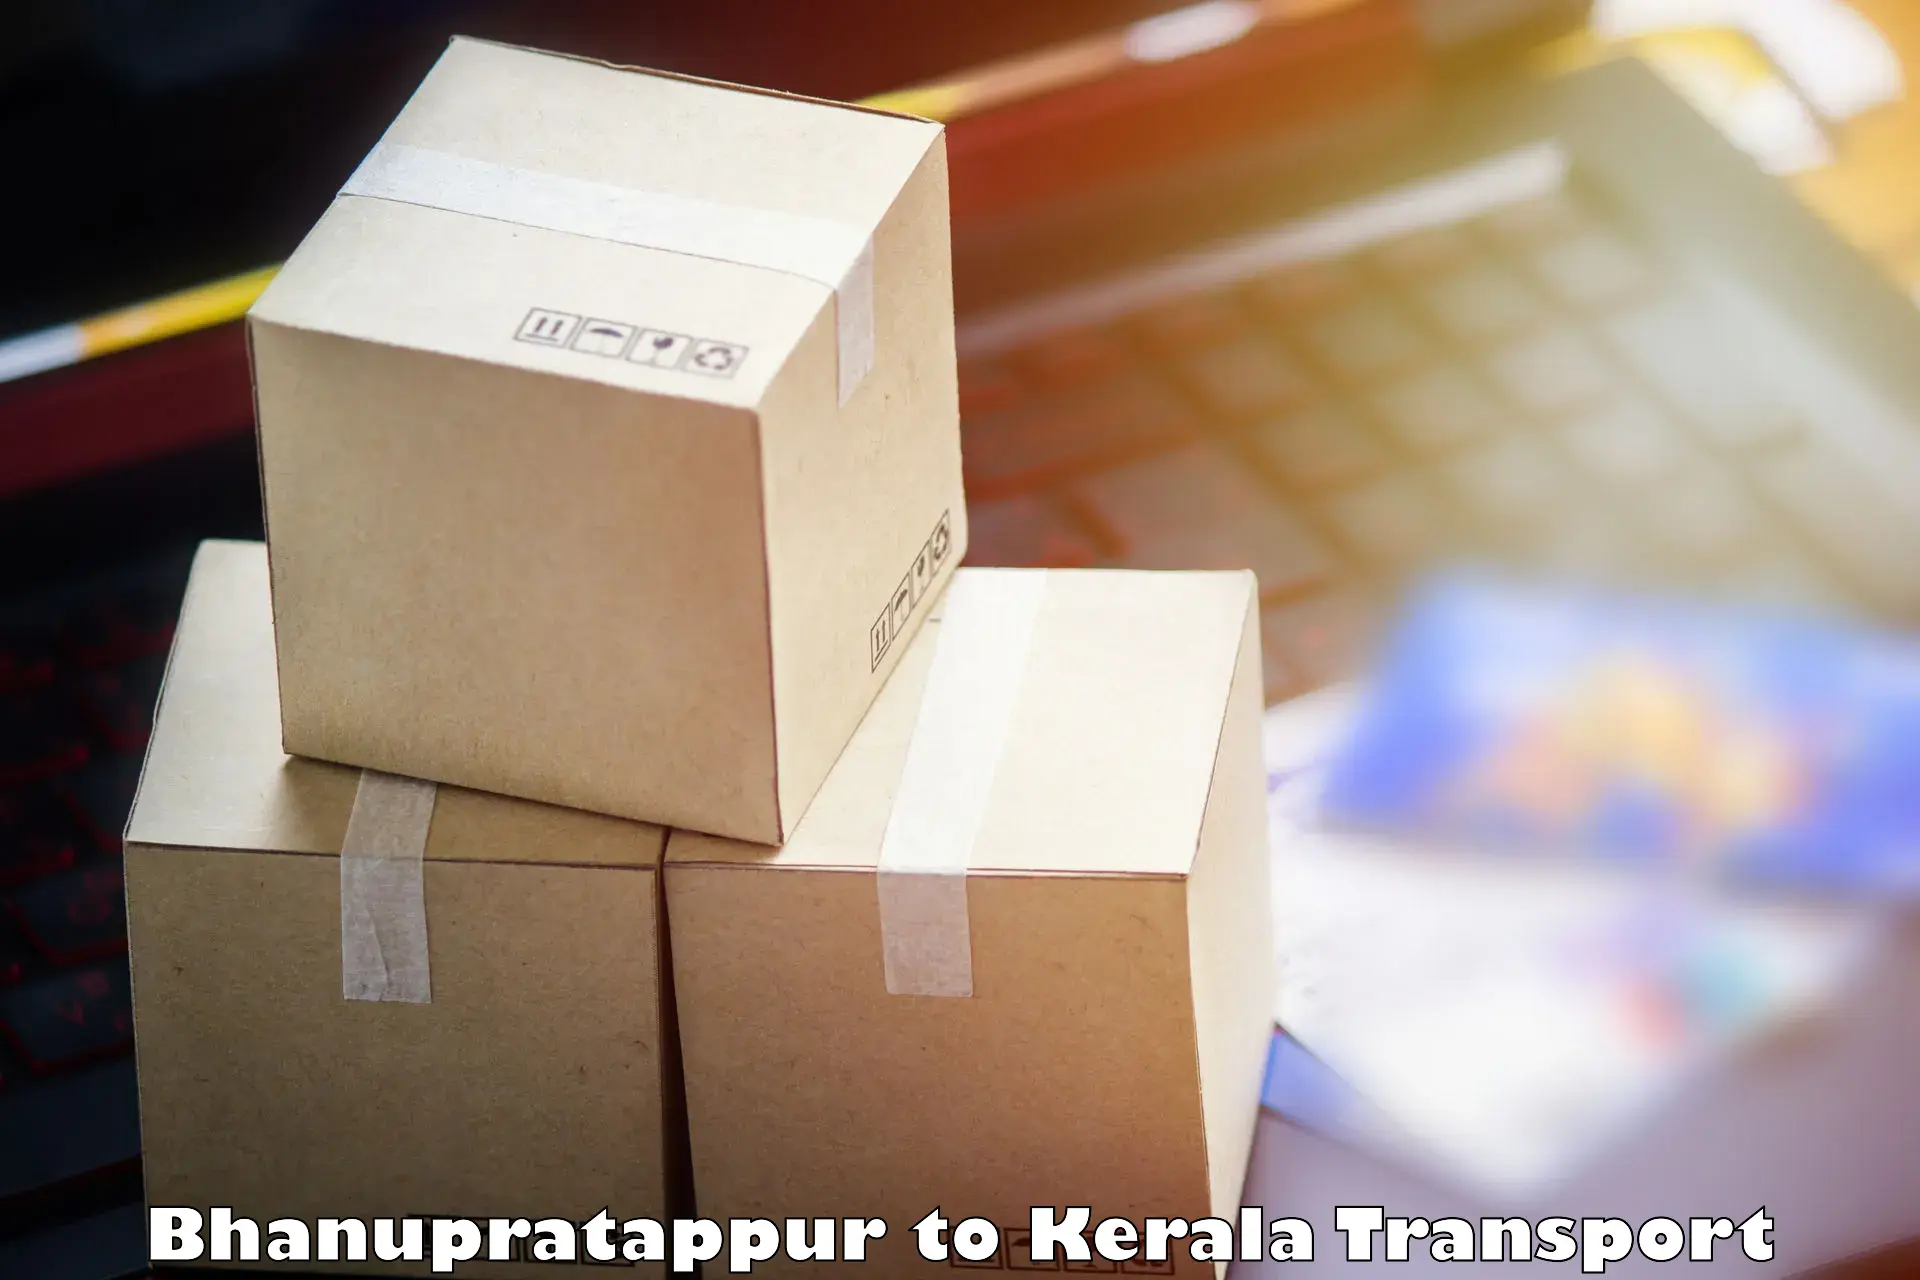 Shipping partner Bhanupratappur to IIIT Kottayam